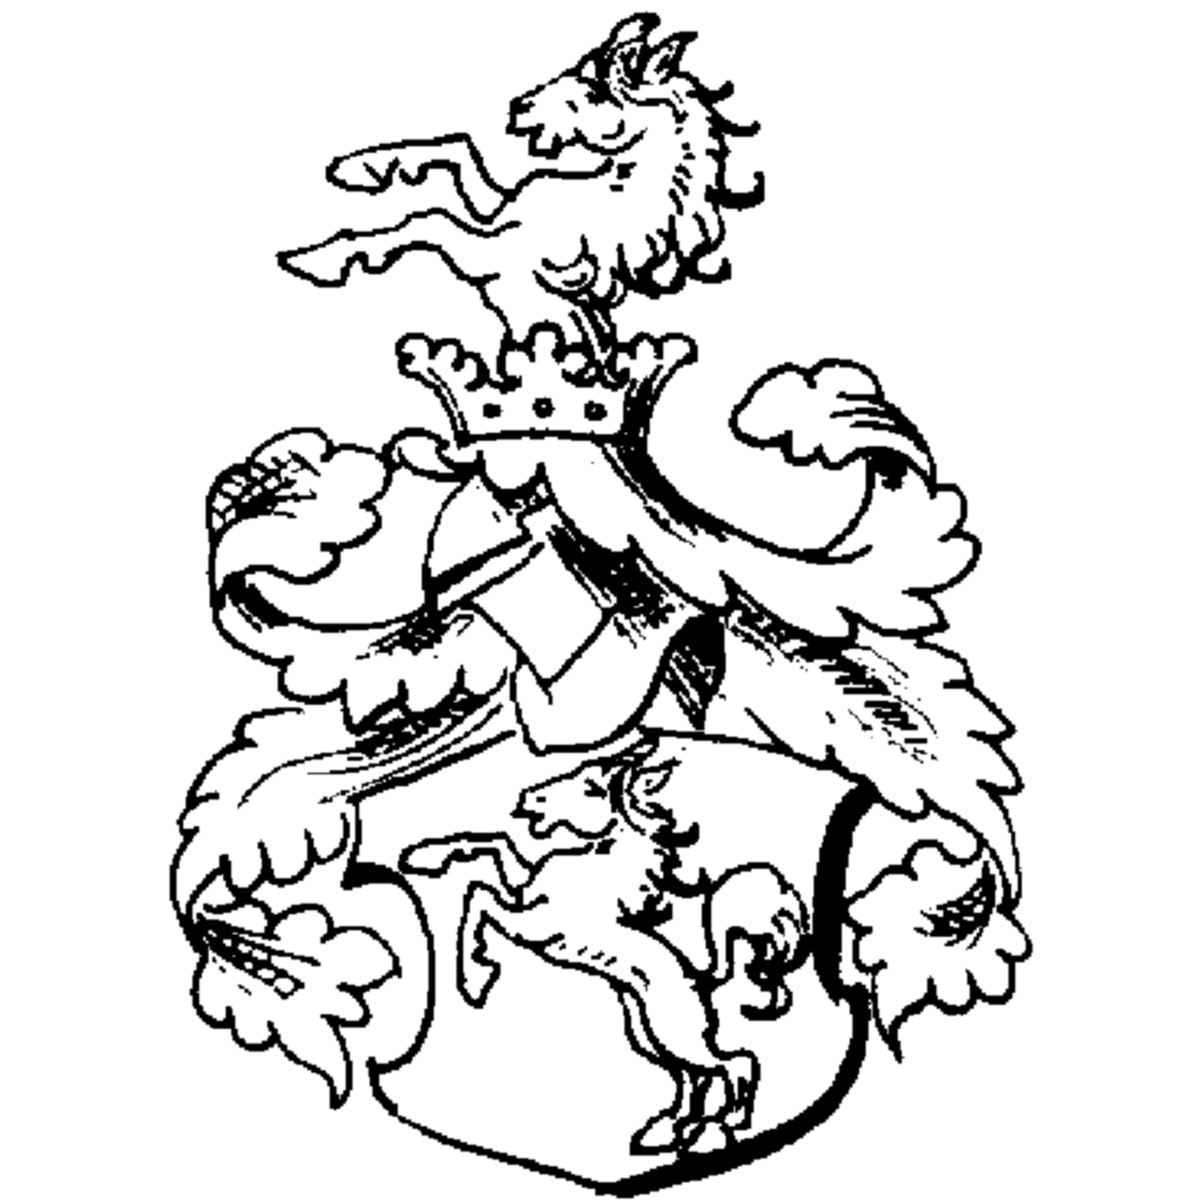 Wappen der Familie Brüssel